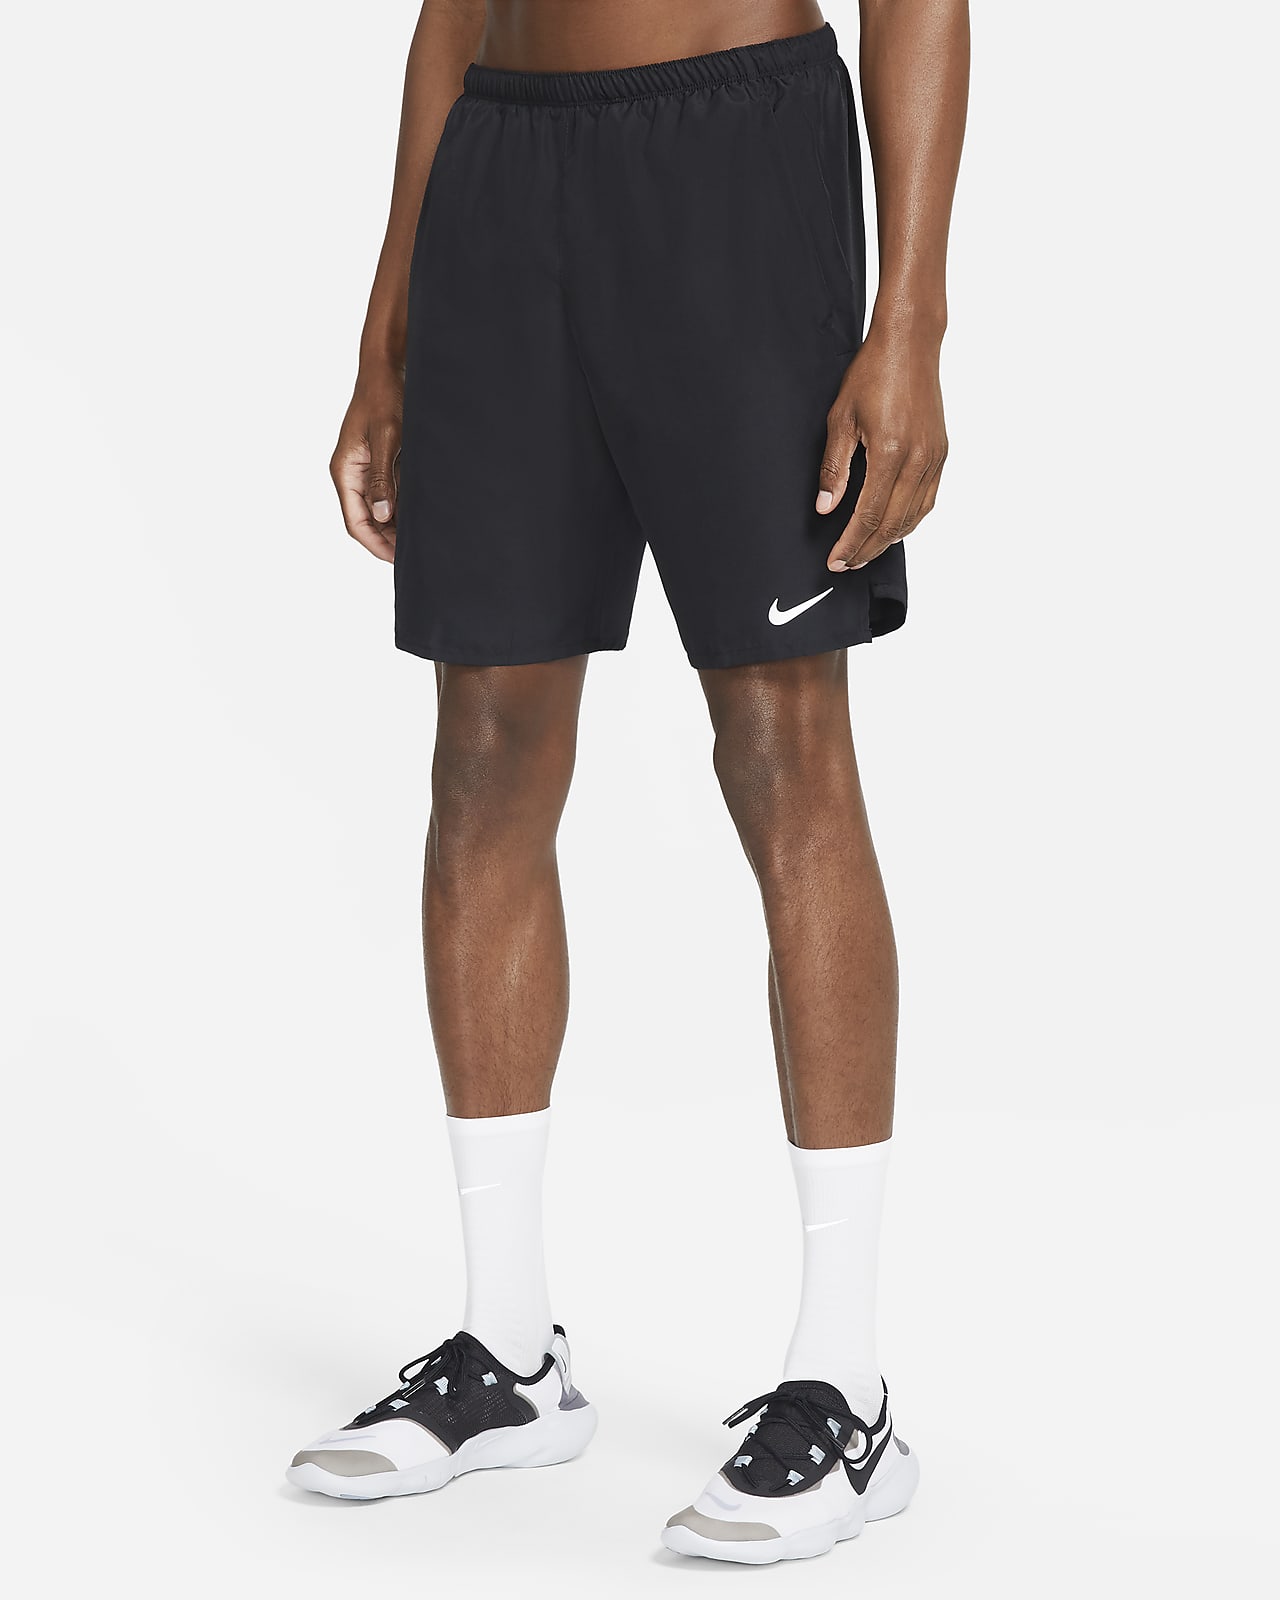 Brief-Lined Running Shorts. Nike LU